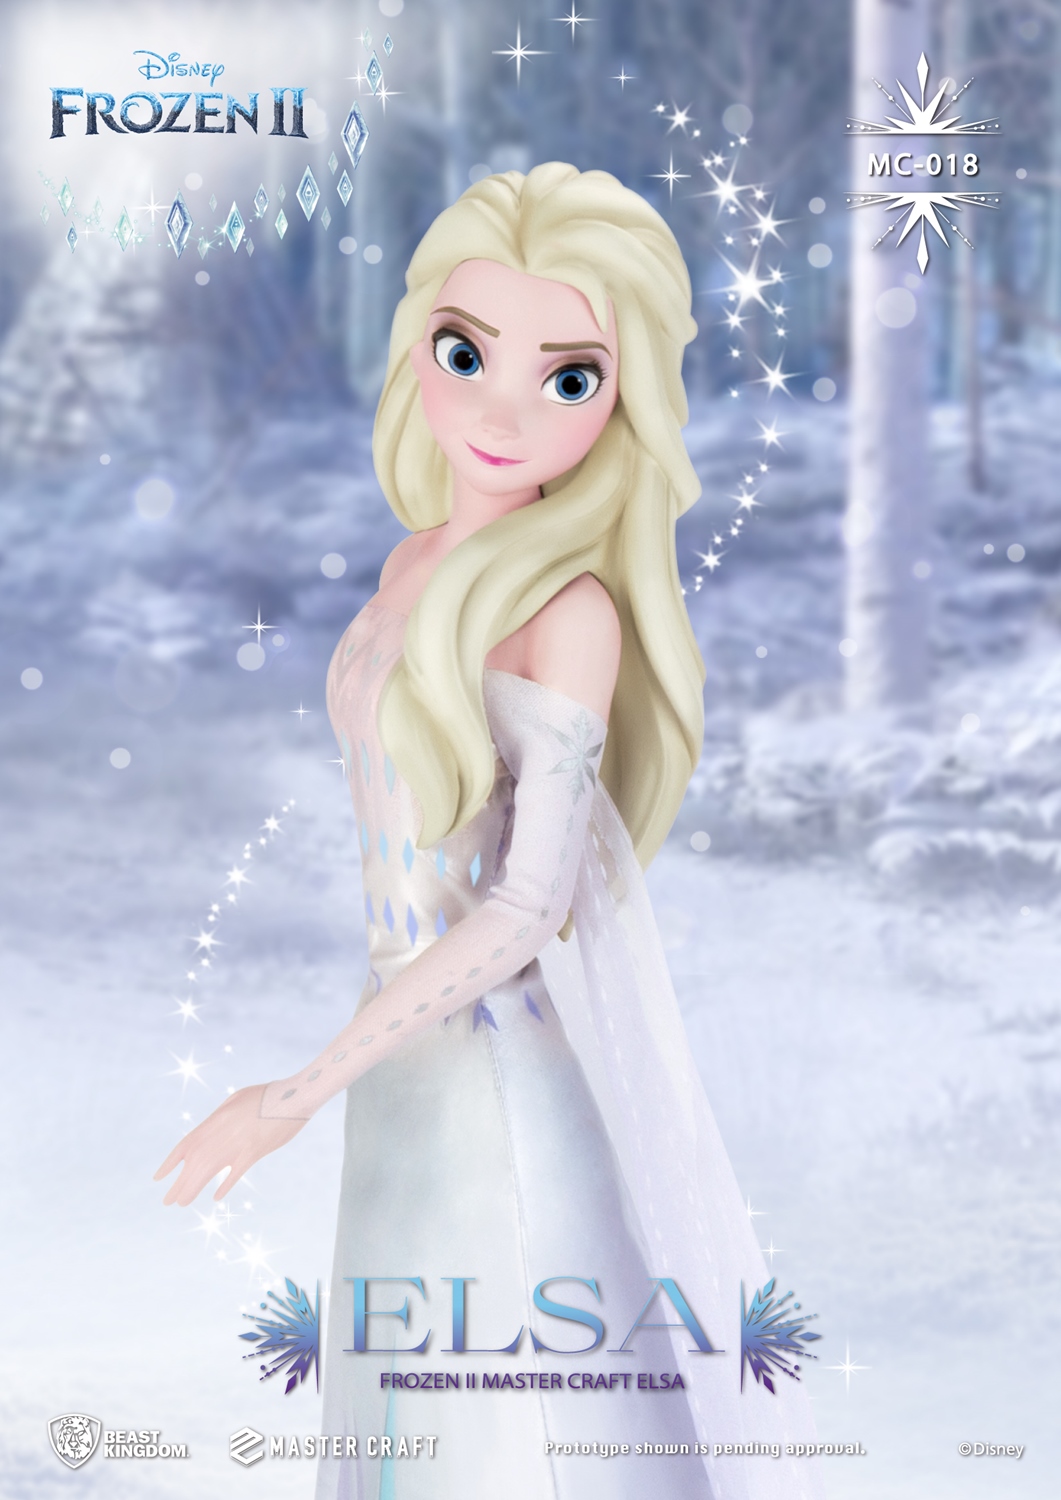 Beast Kingdom MC-018 Disney Frozen II: Elsa 1:4 Scale Master Craft Figure Statue